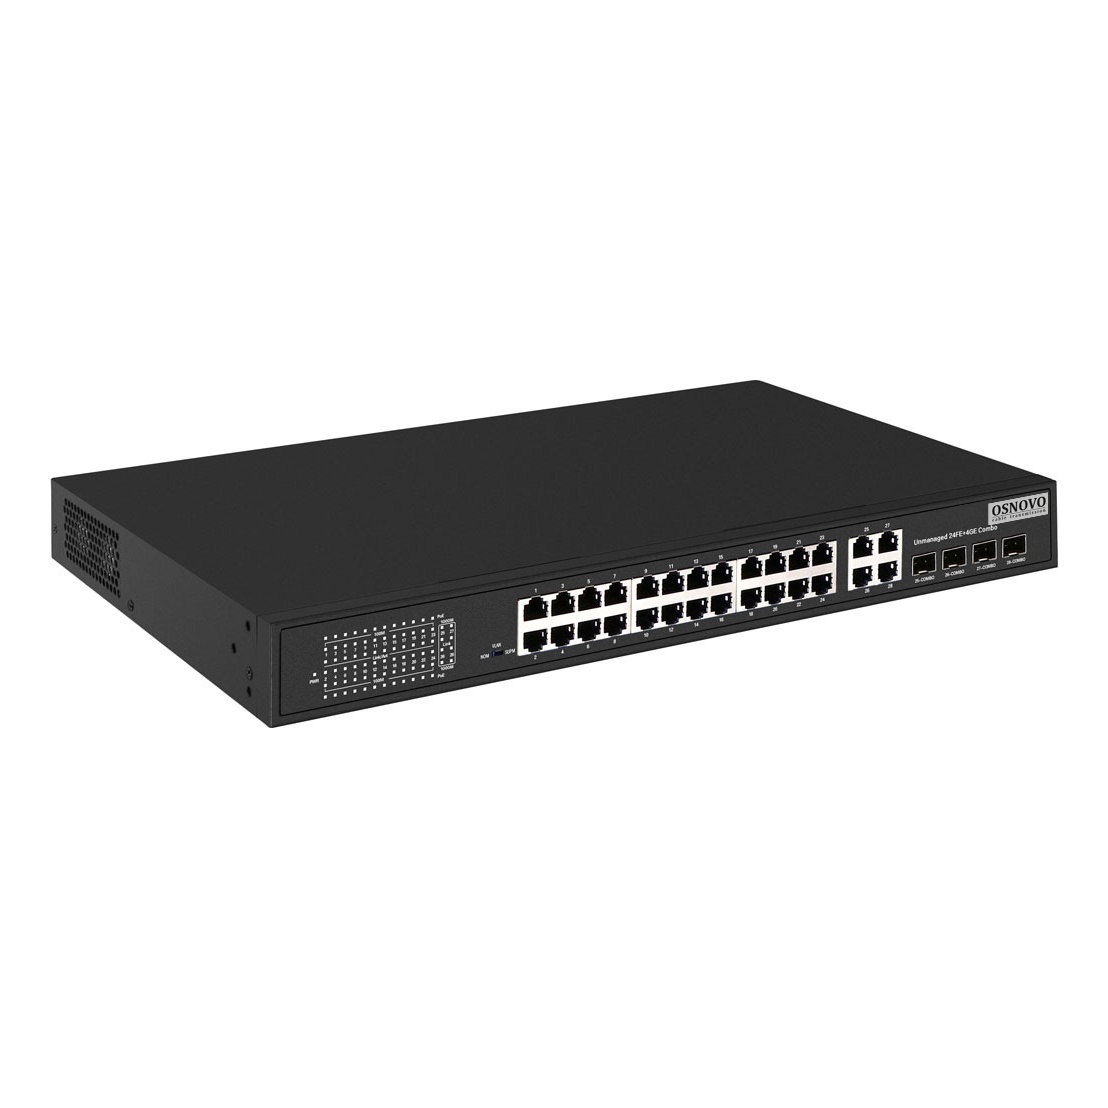 OSNOVO SW-62444(400W) SW-62444(400W) PoE коммутатор Fast Ethernet на 24 x RJ45 портов + 4 x GE Combo uplink порта